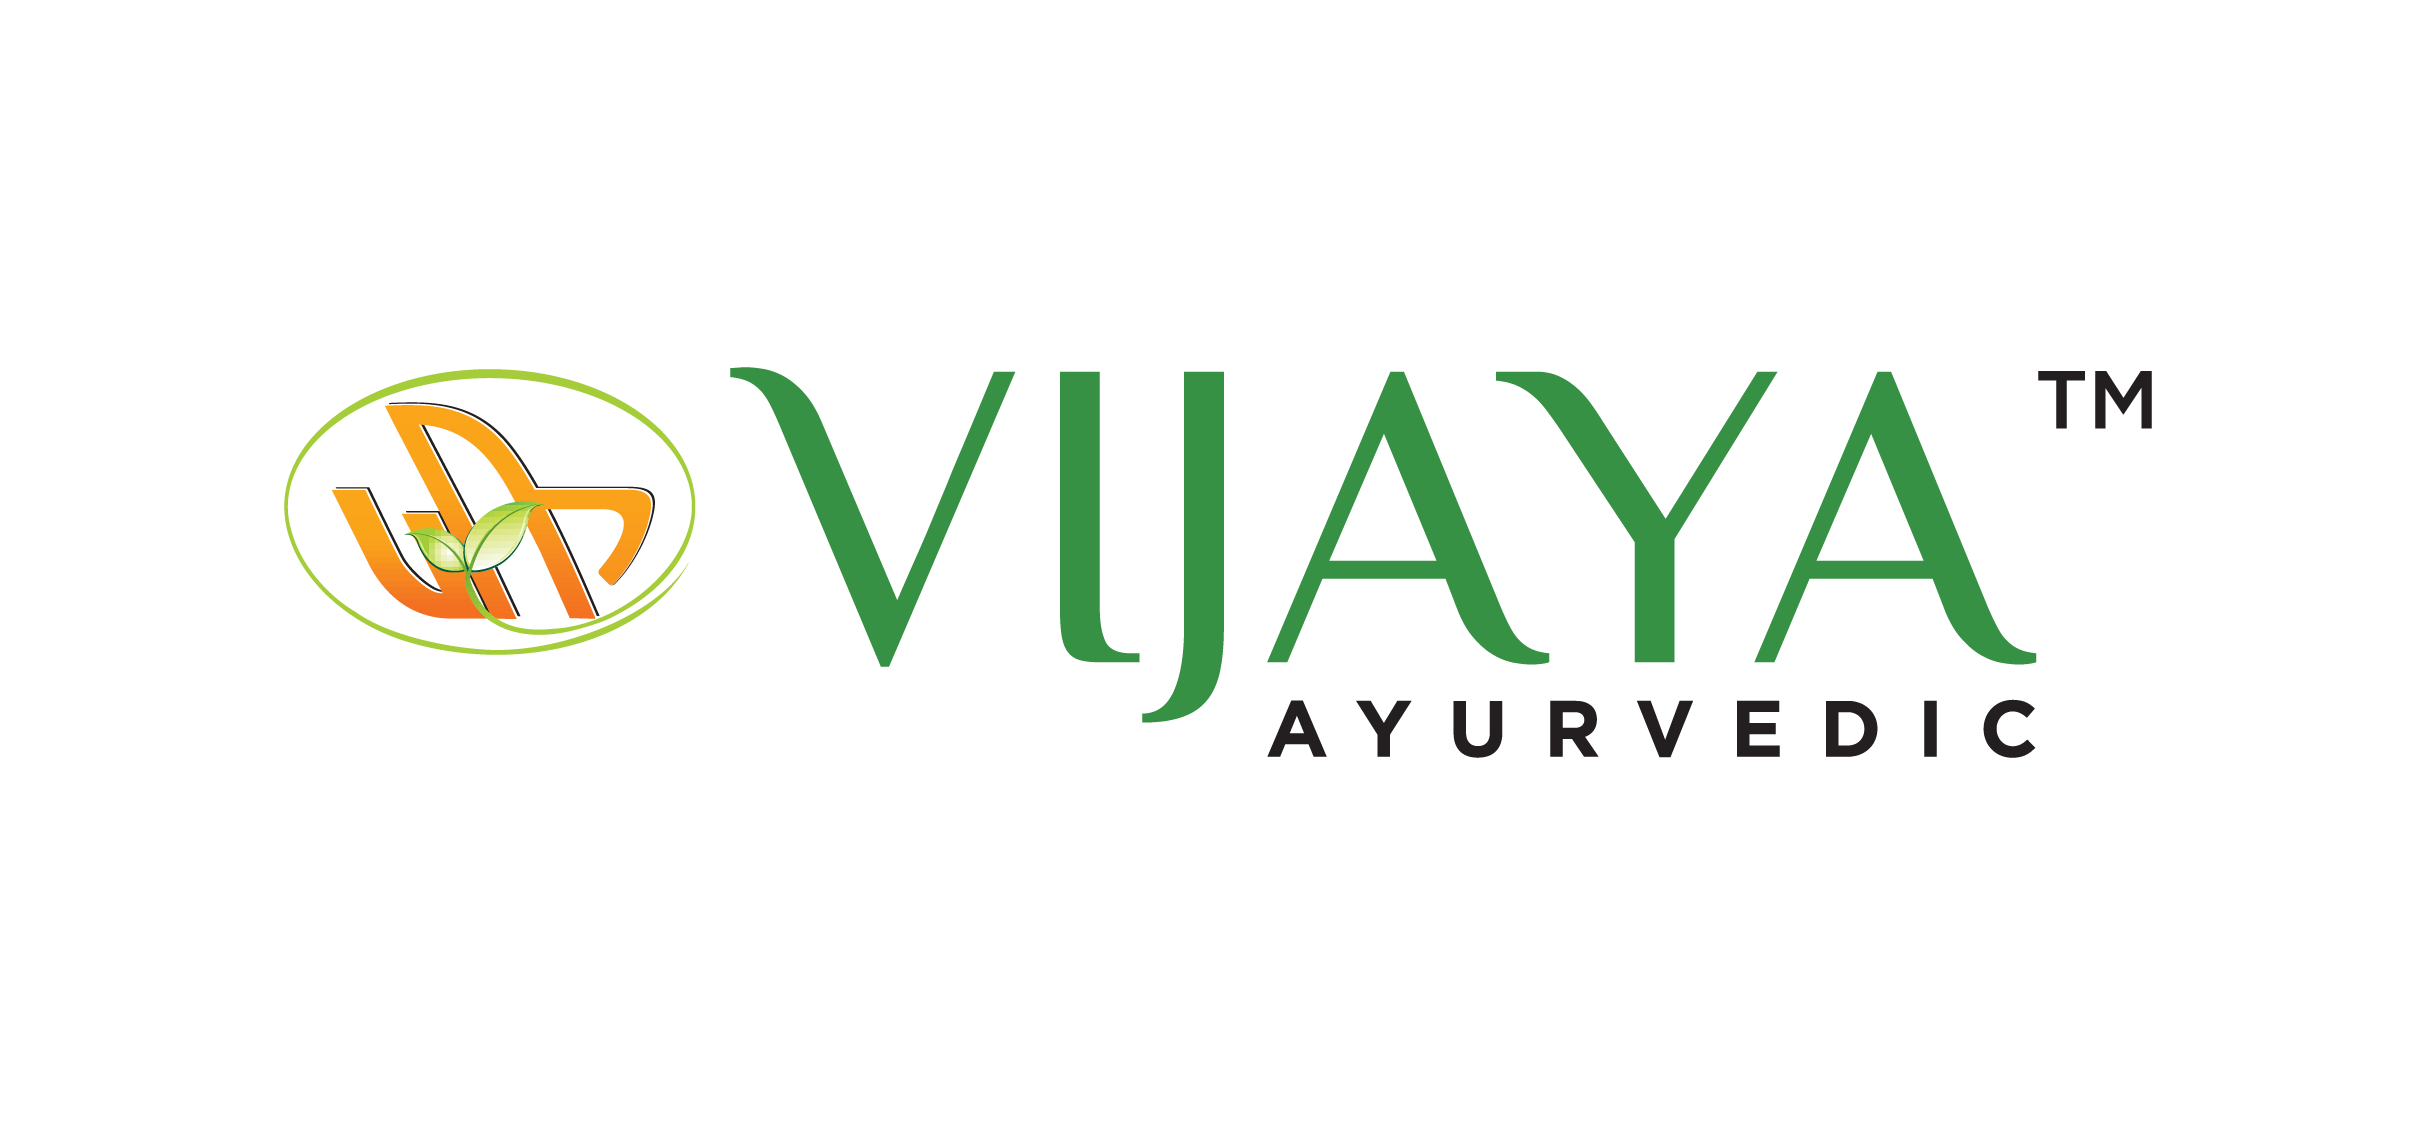 buy ayurvedic medicines online